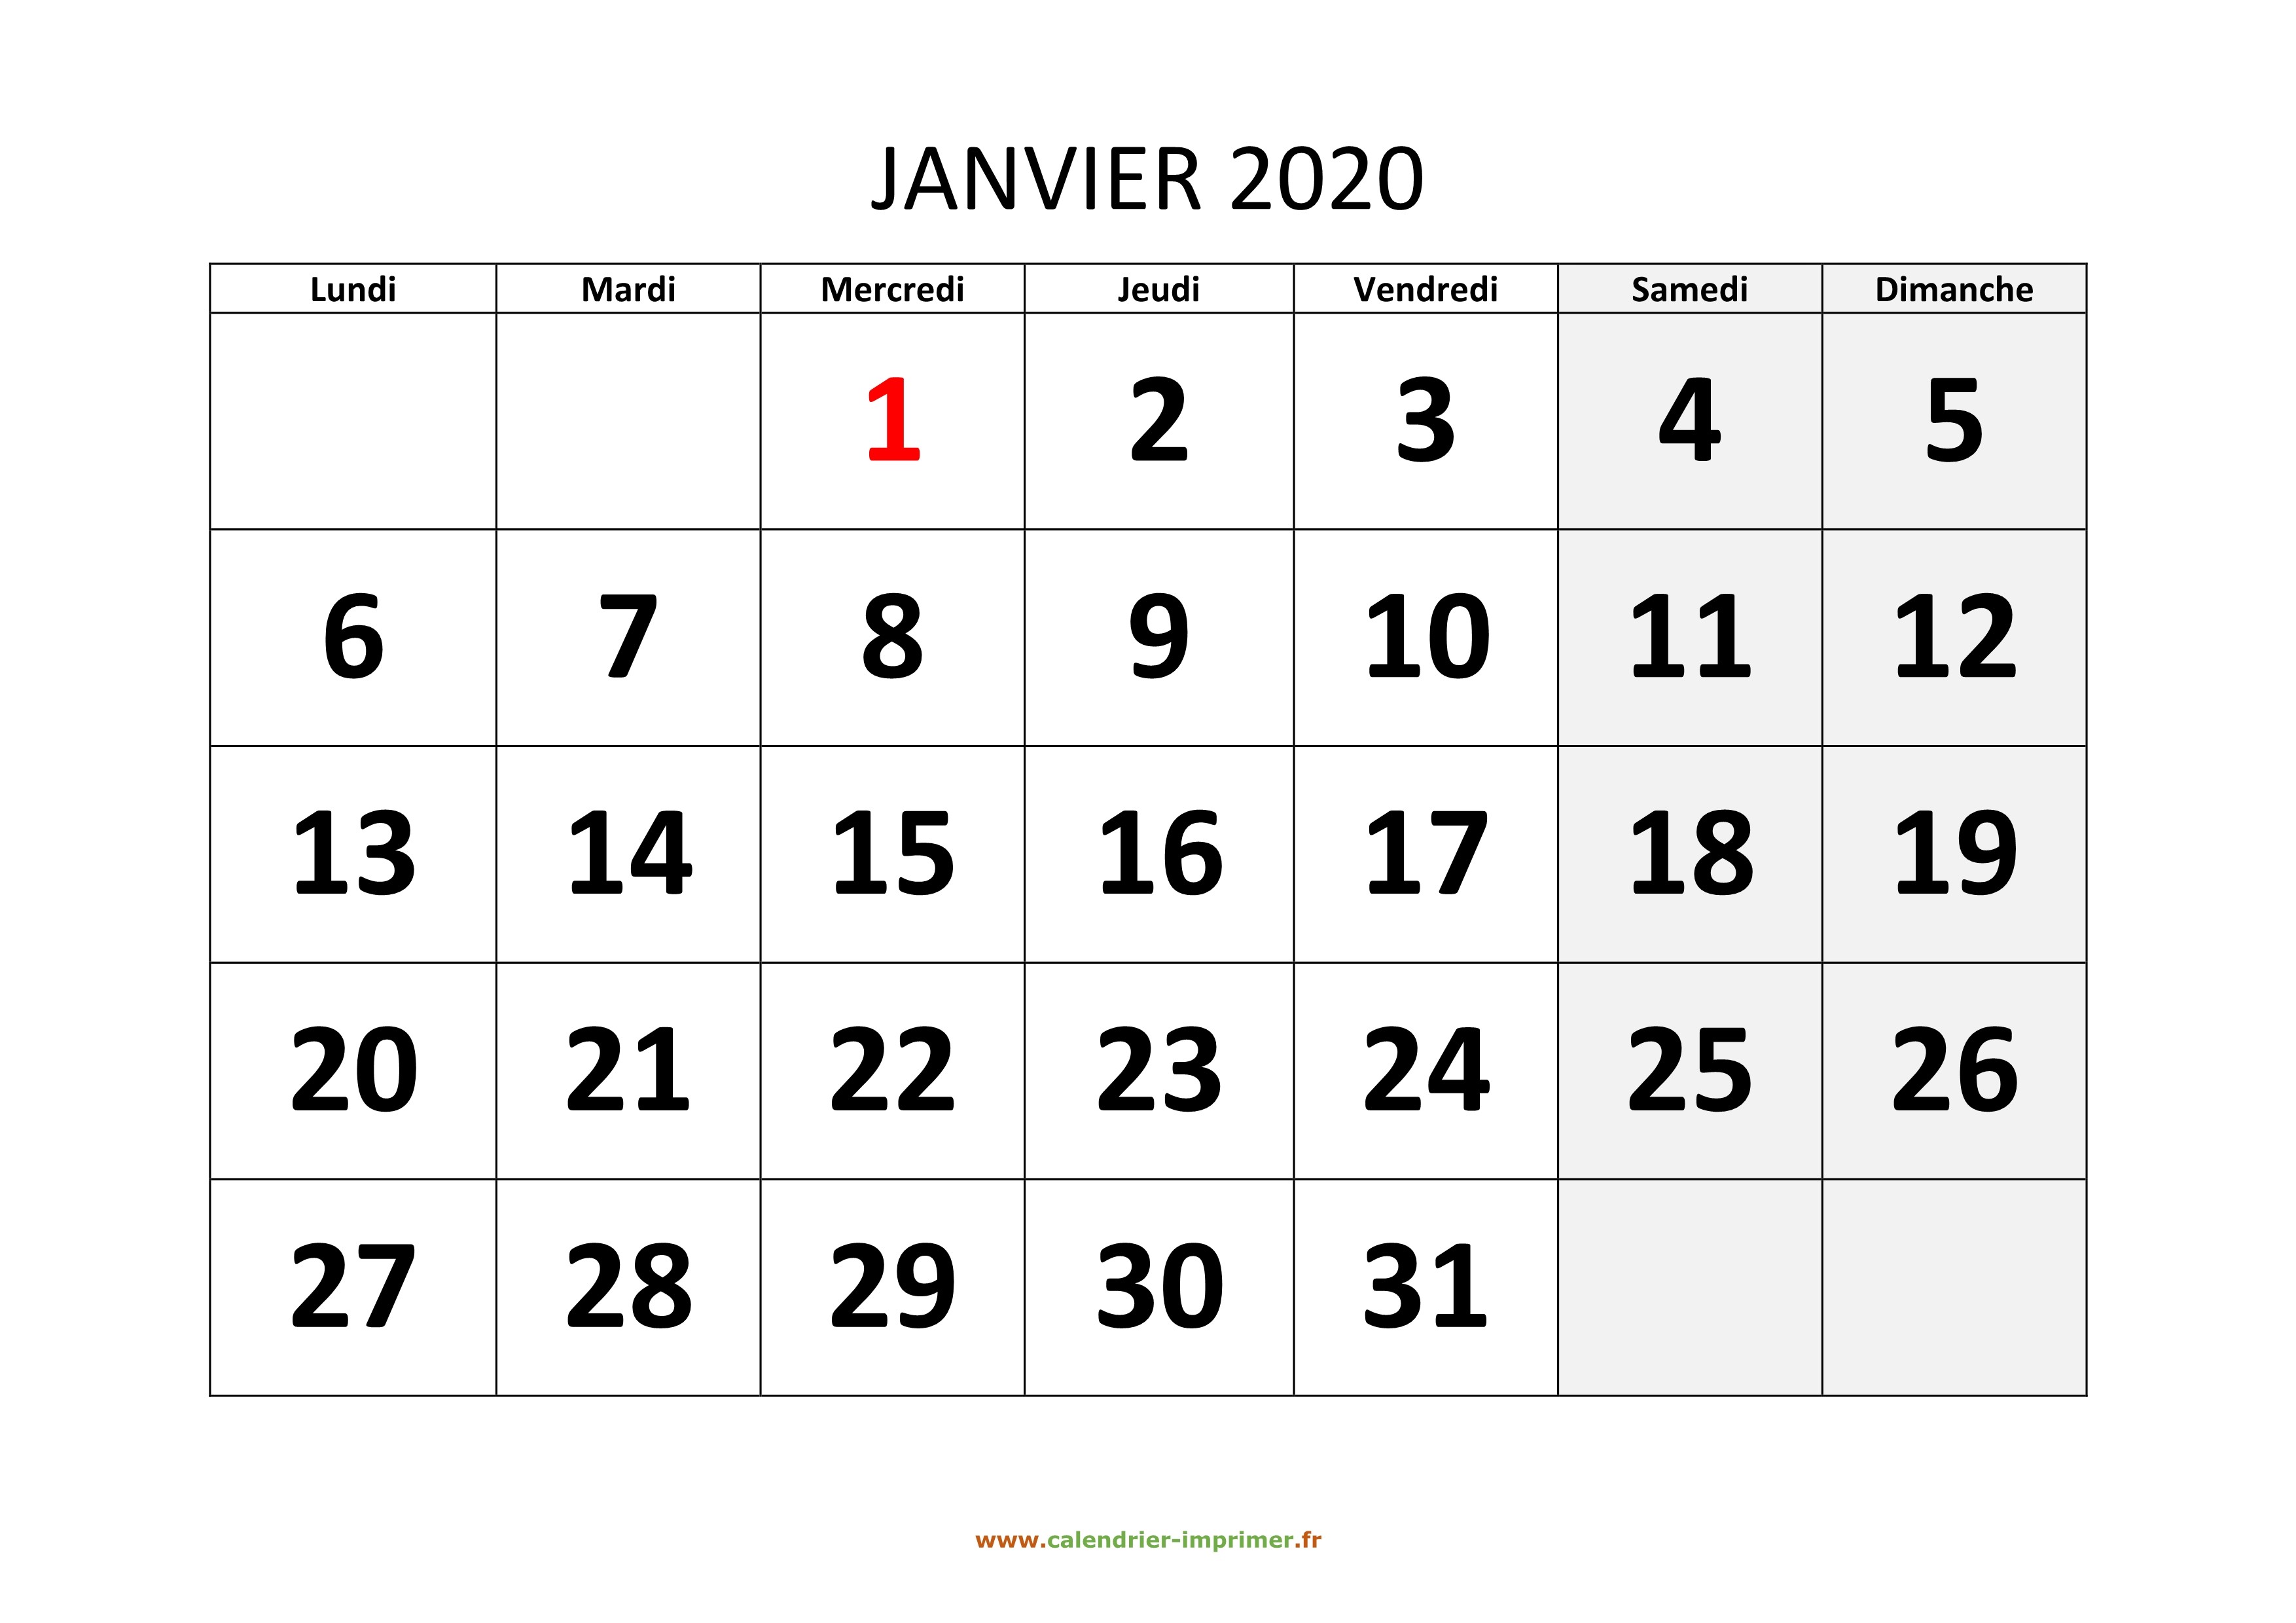 Calendrier Hiver 2019-2020 - Janvier 2020